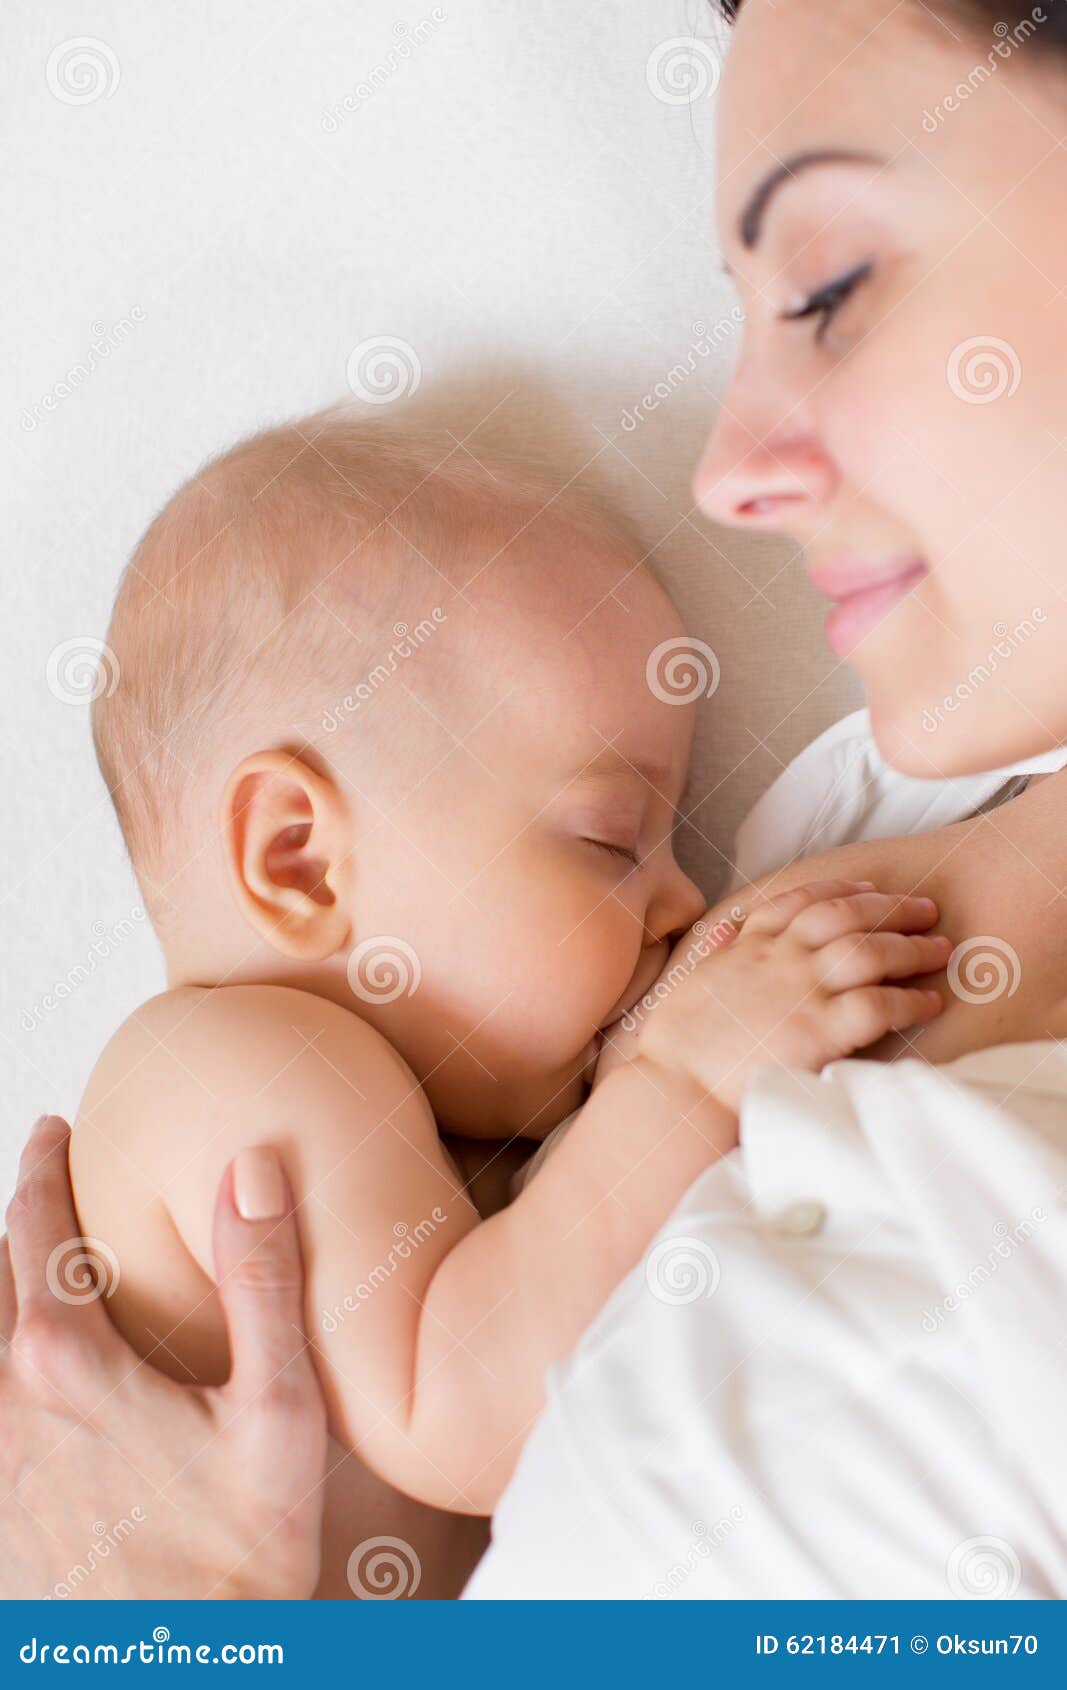 Woman Sexy Pregnant Nursing Bra Cotton Sleep Nursing Feeding